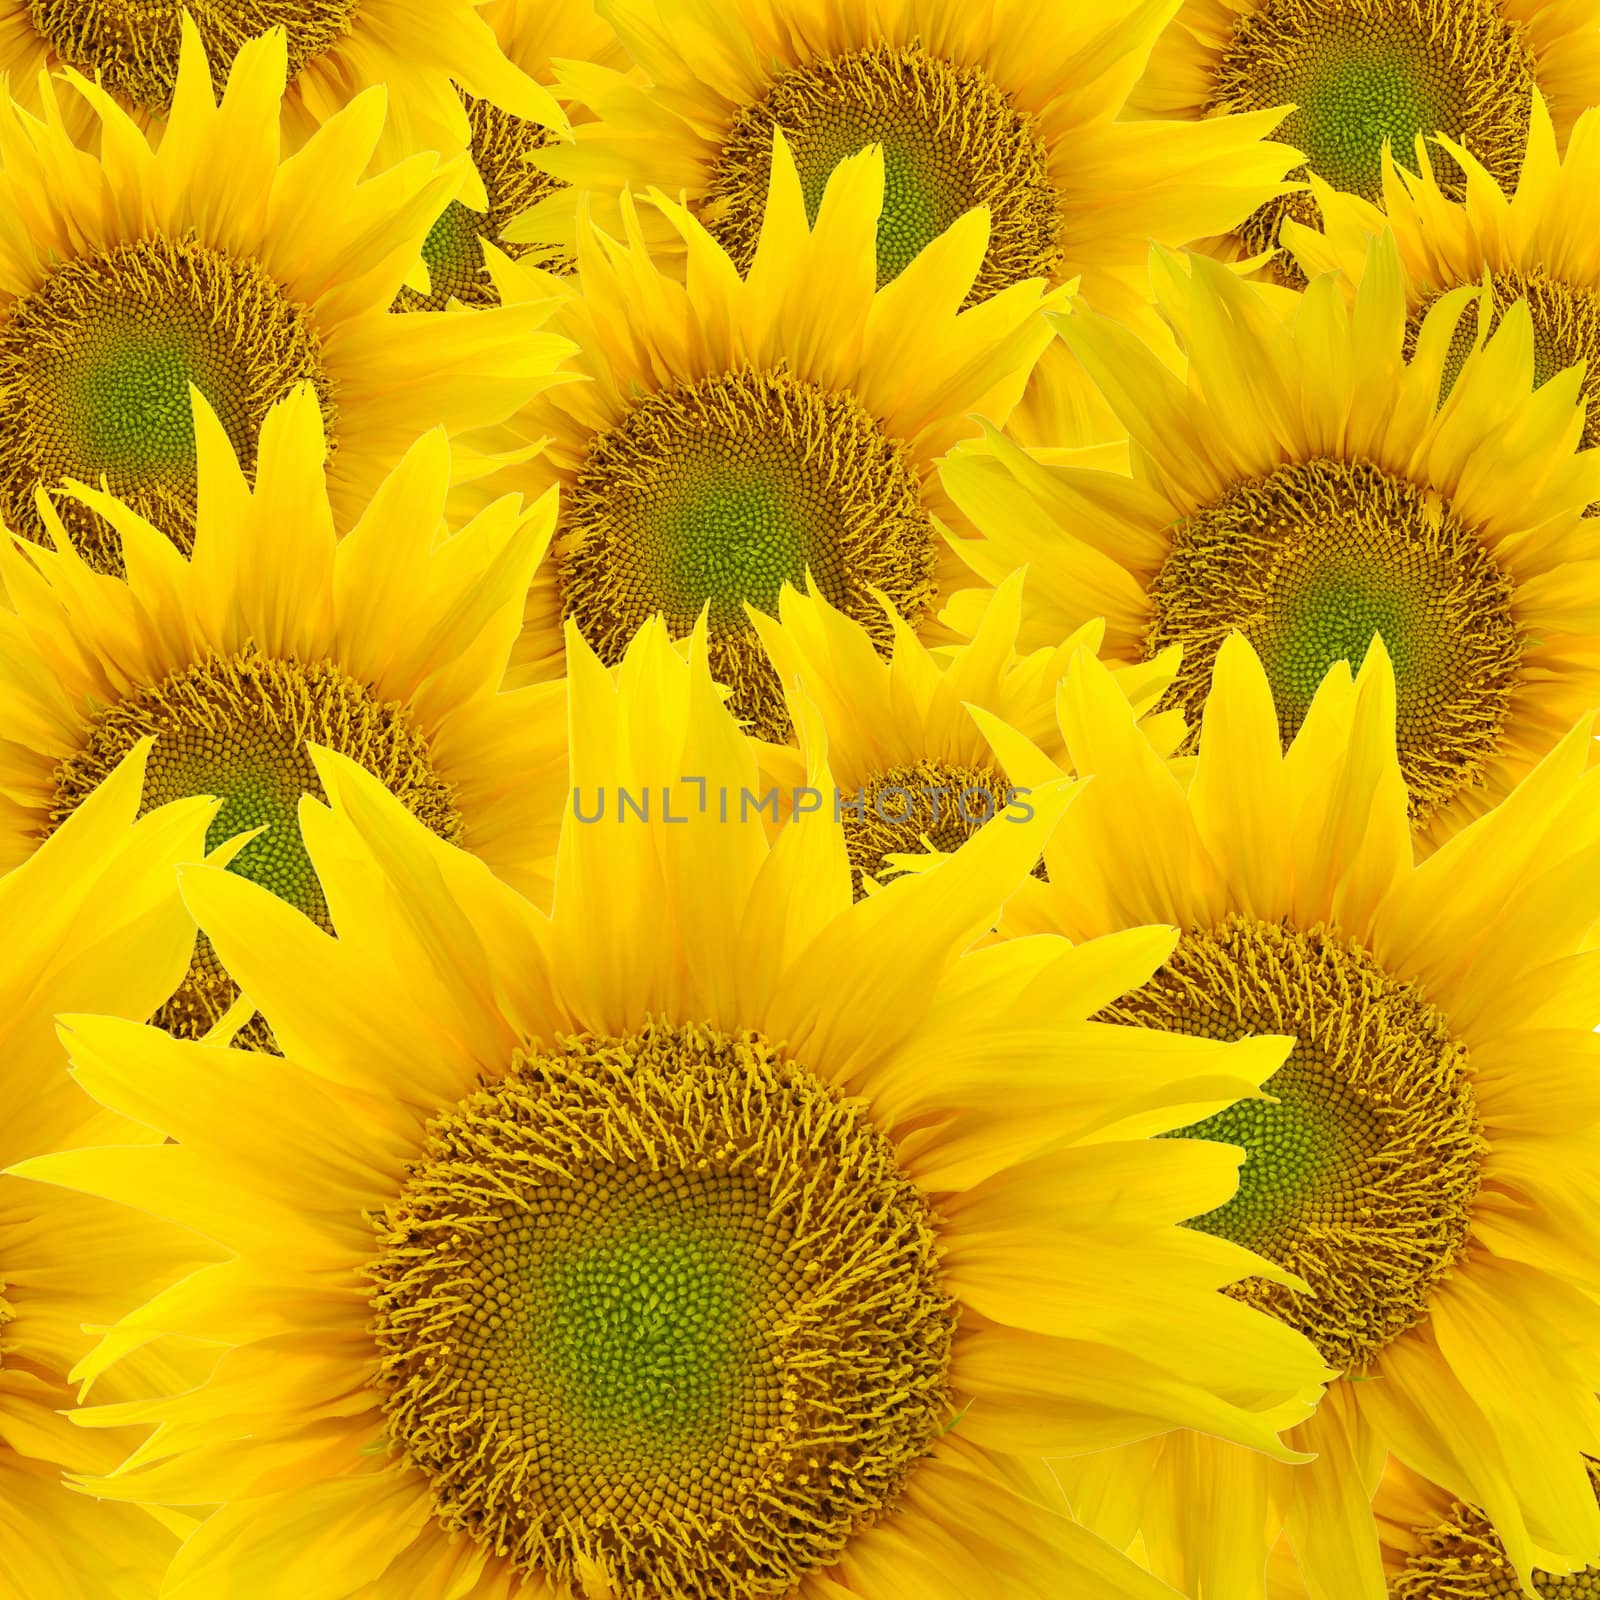 Sunflower by antpkr